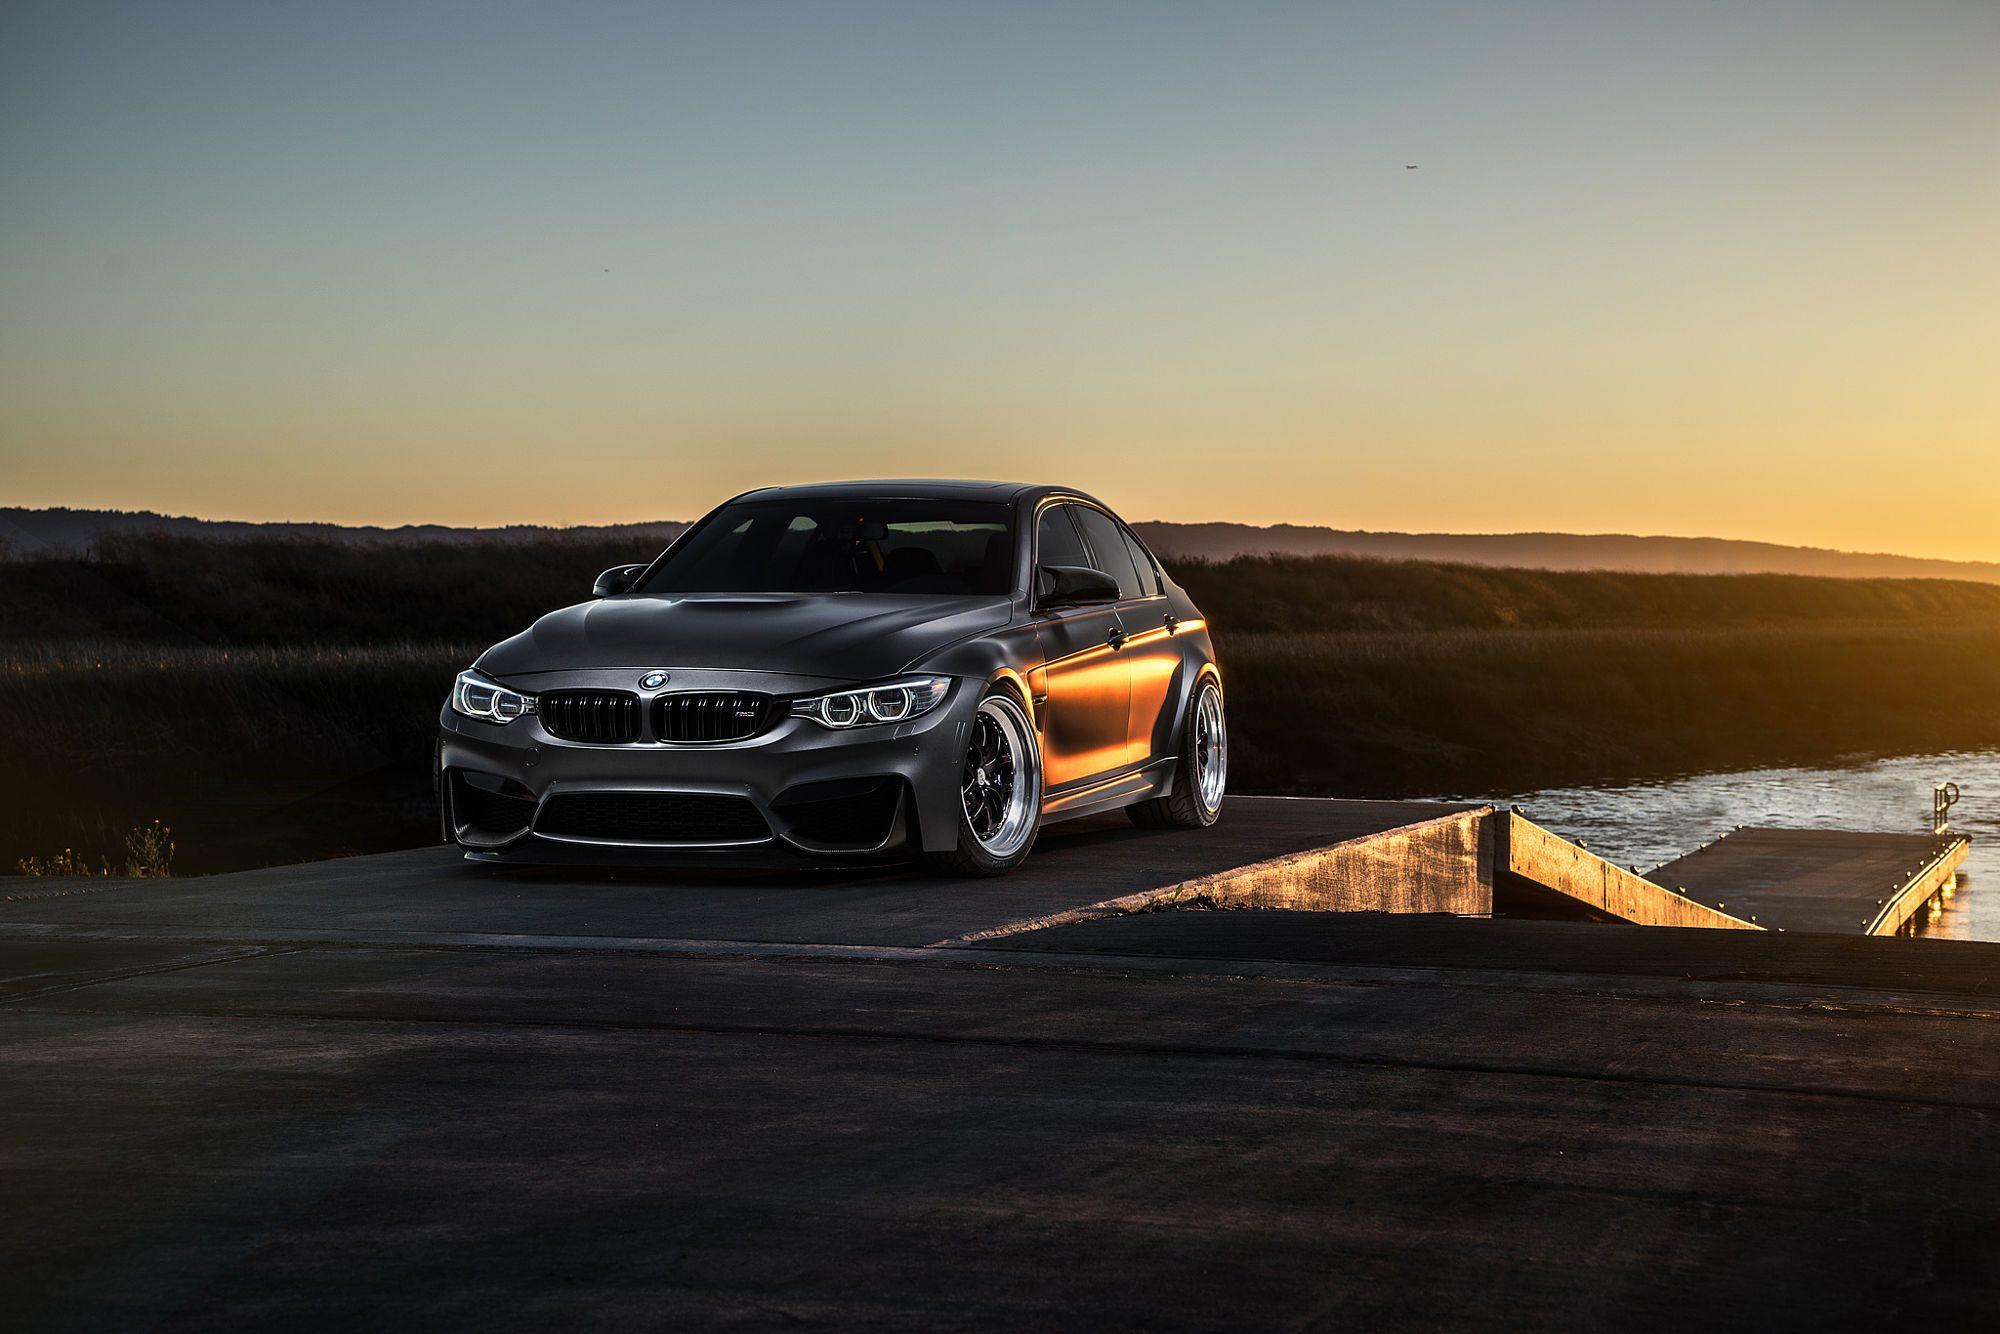 BMW M3 Sport, HD Cars, 4k Wallpaper, Image, Background, Photo